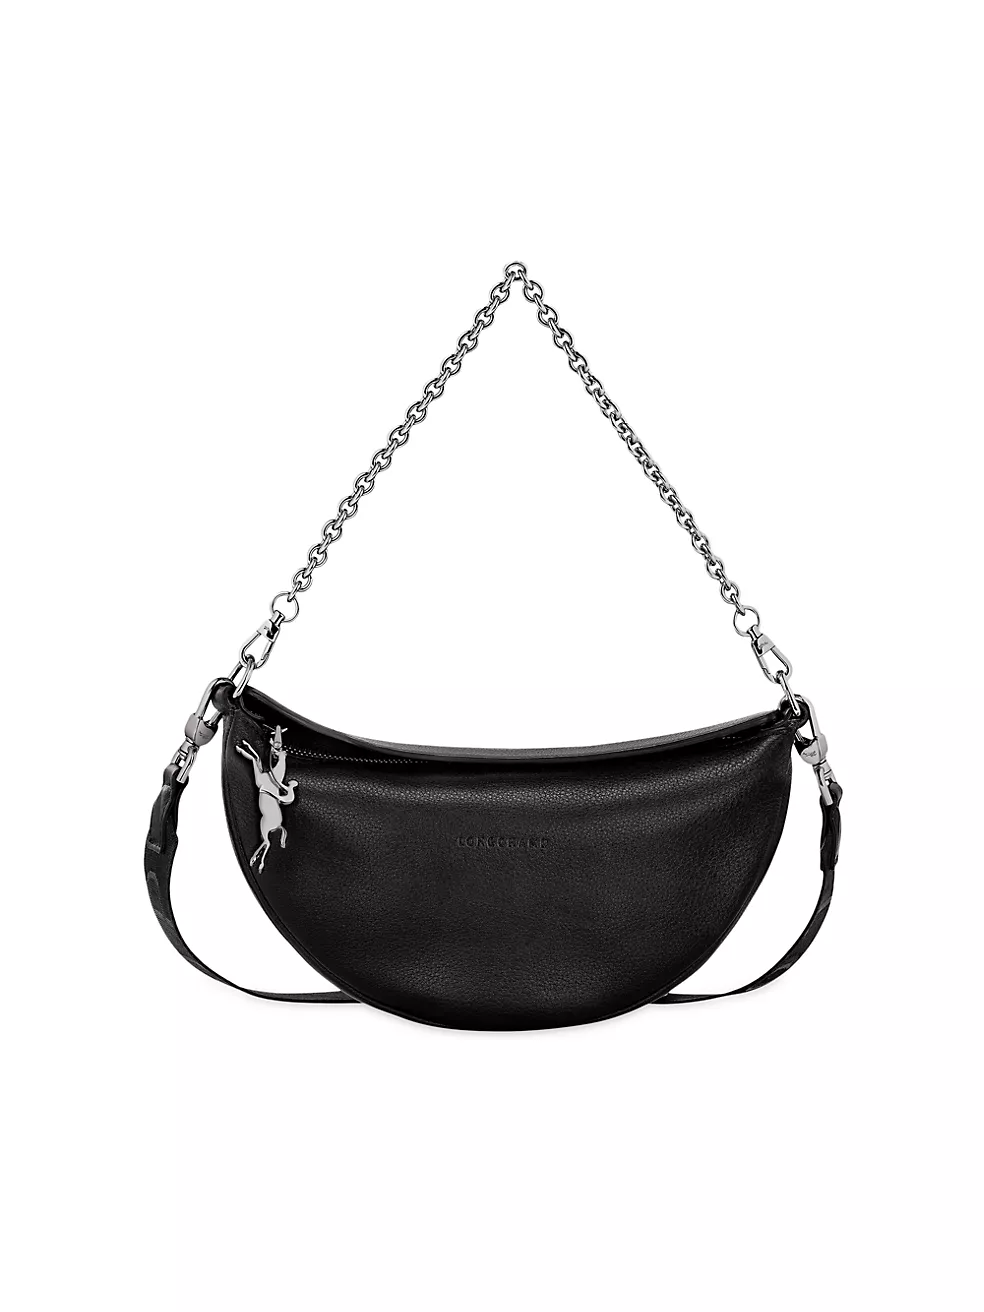 Longchamp Smile Small Leather Crossbody Bag